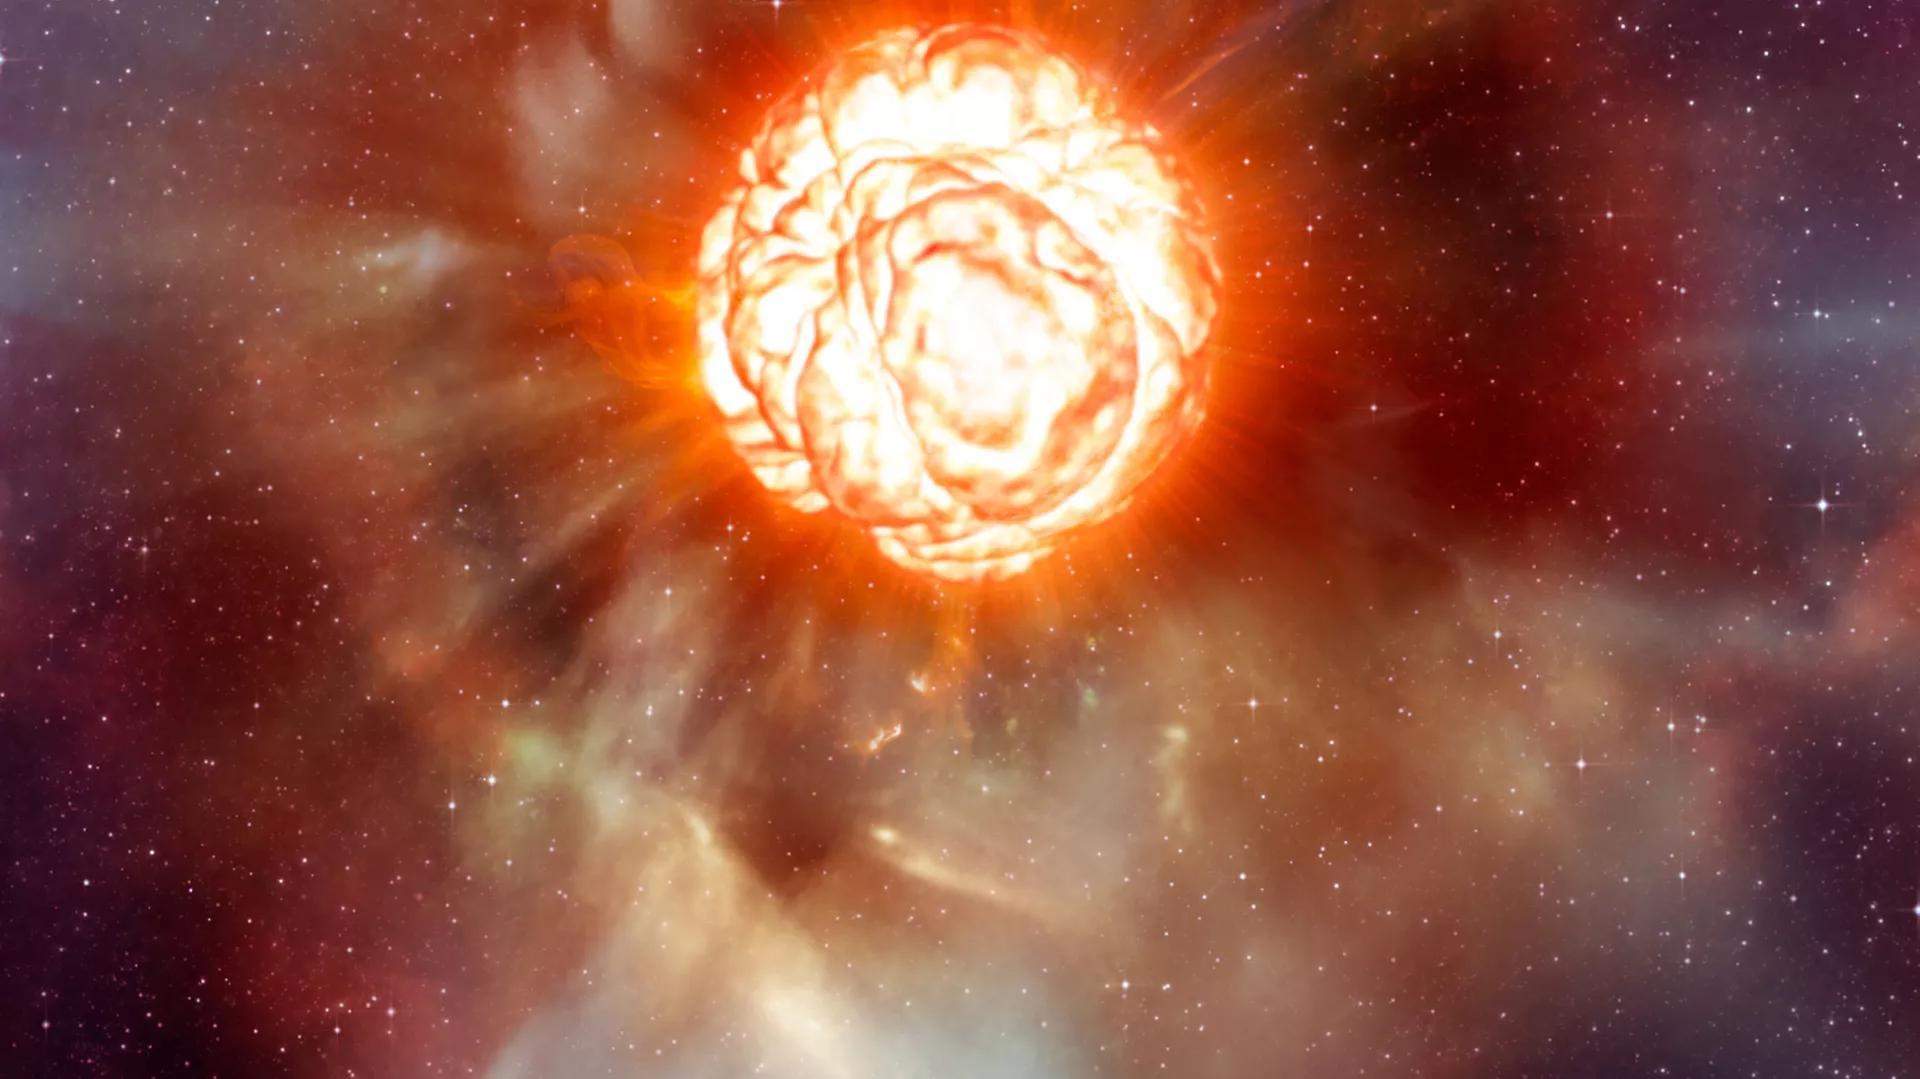 Astronomers Detect Betelgeuse Star Acting Strange - Again